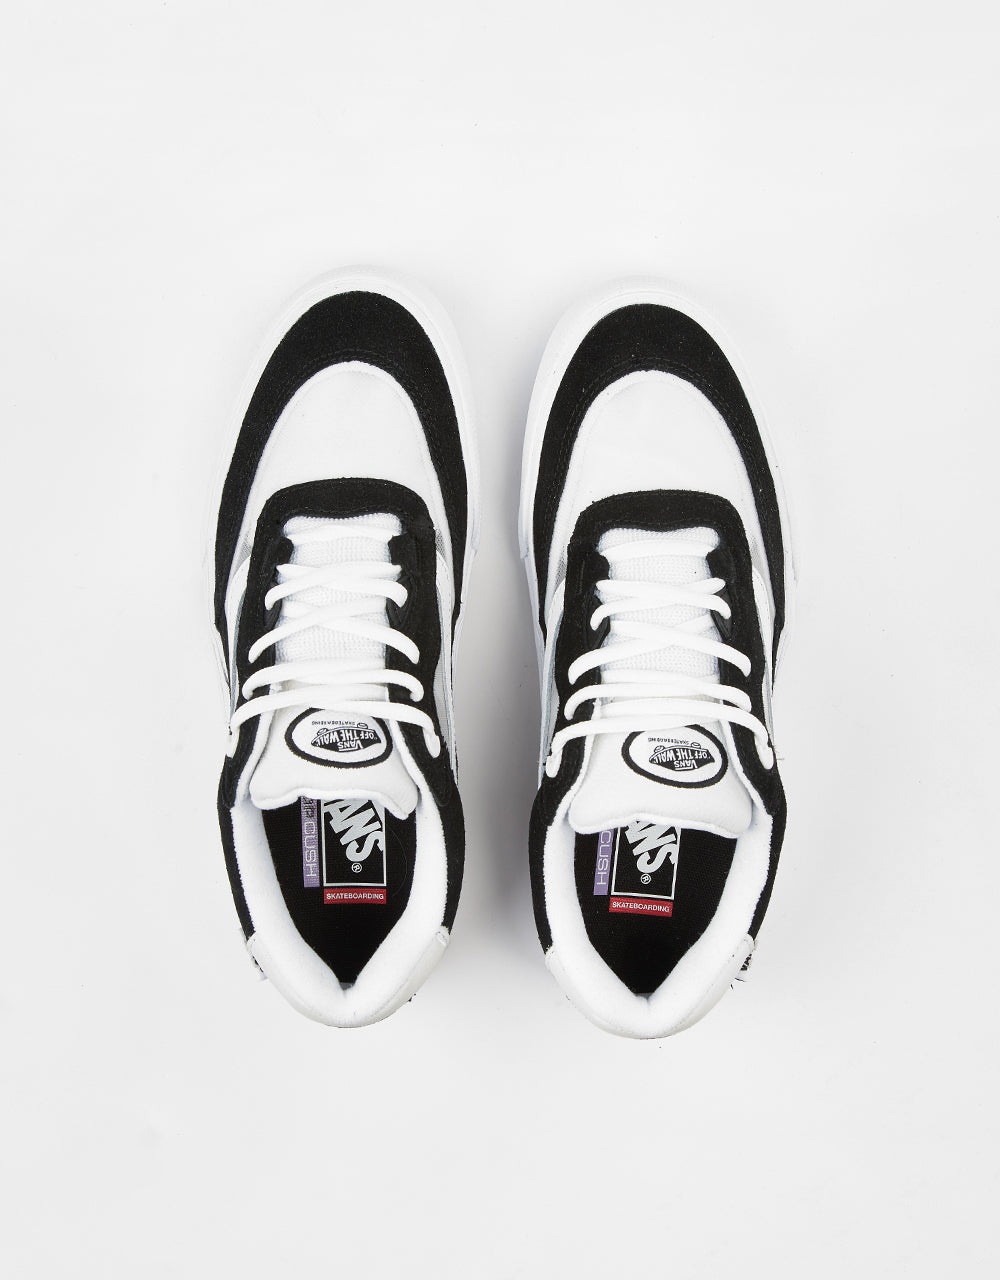 Vans Skate Wayvee Skate Shoes - Black/True White